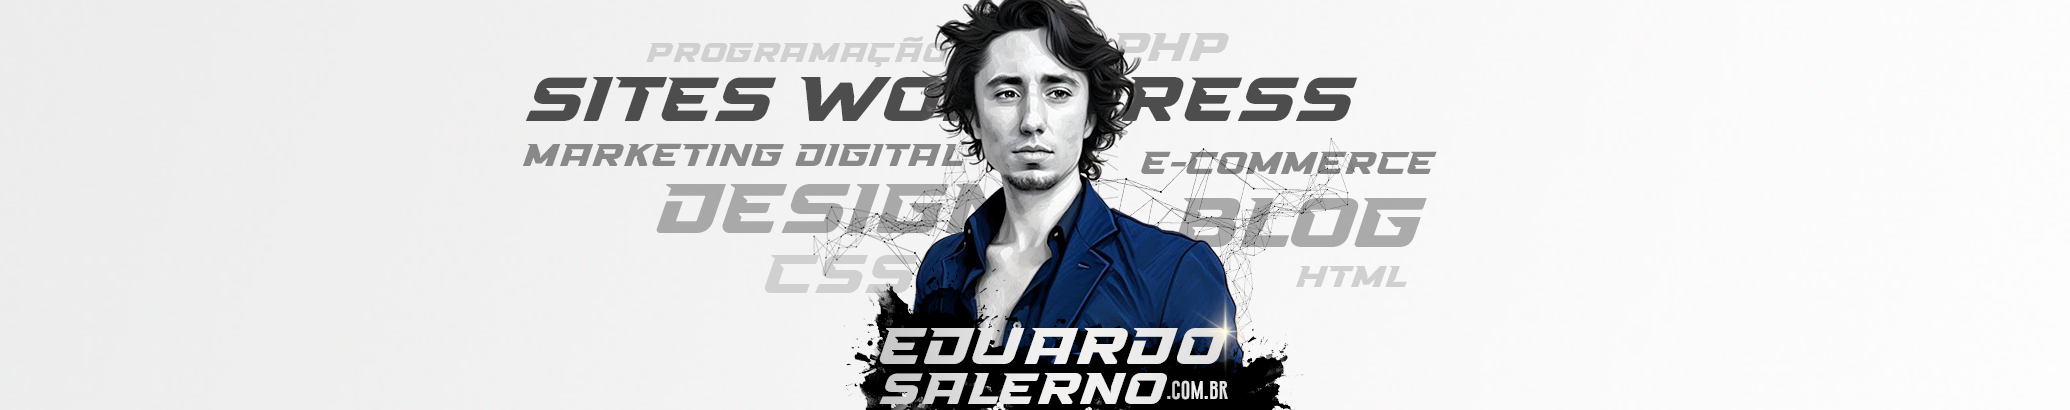 Eduardo Salernos profilbanner